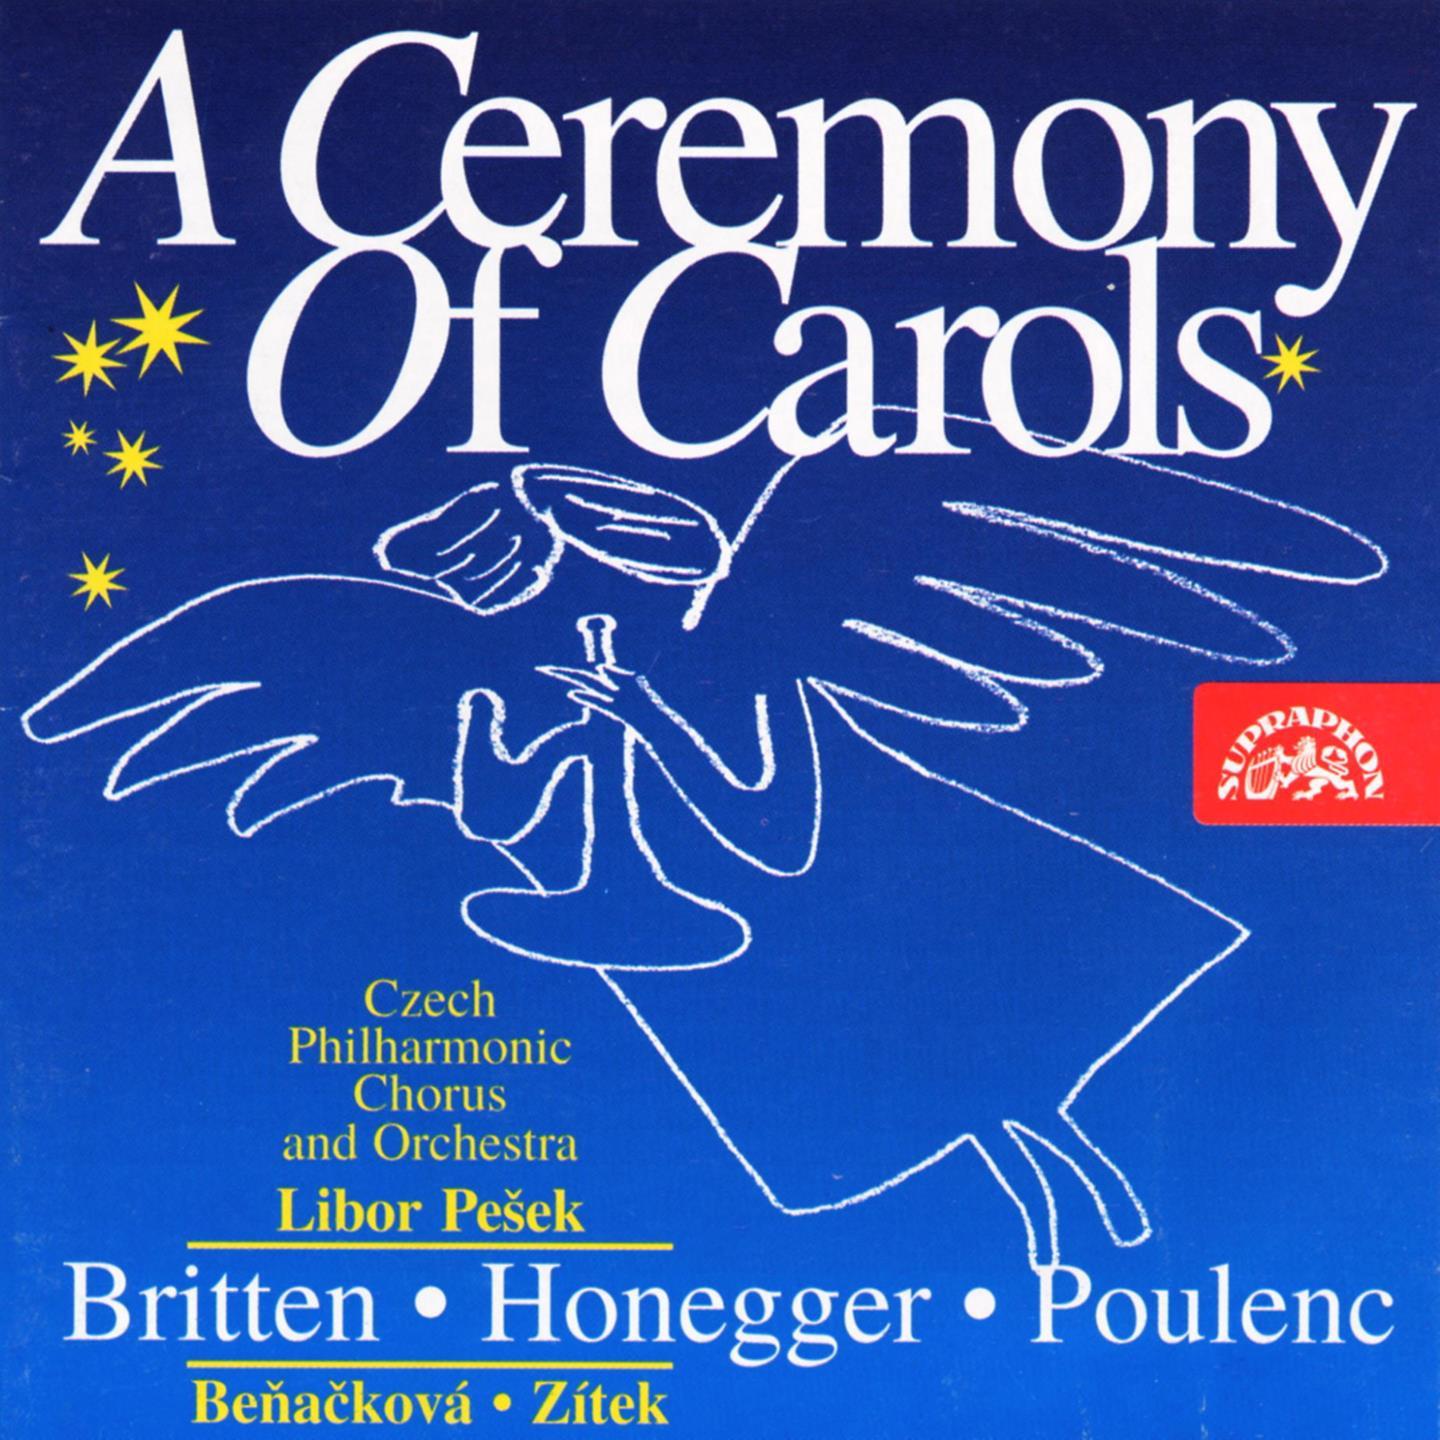 A Ceremony of Carols, Op. 28: IX. Spring Carol